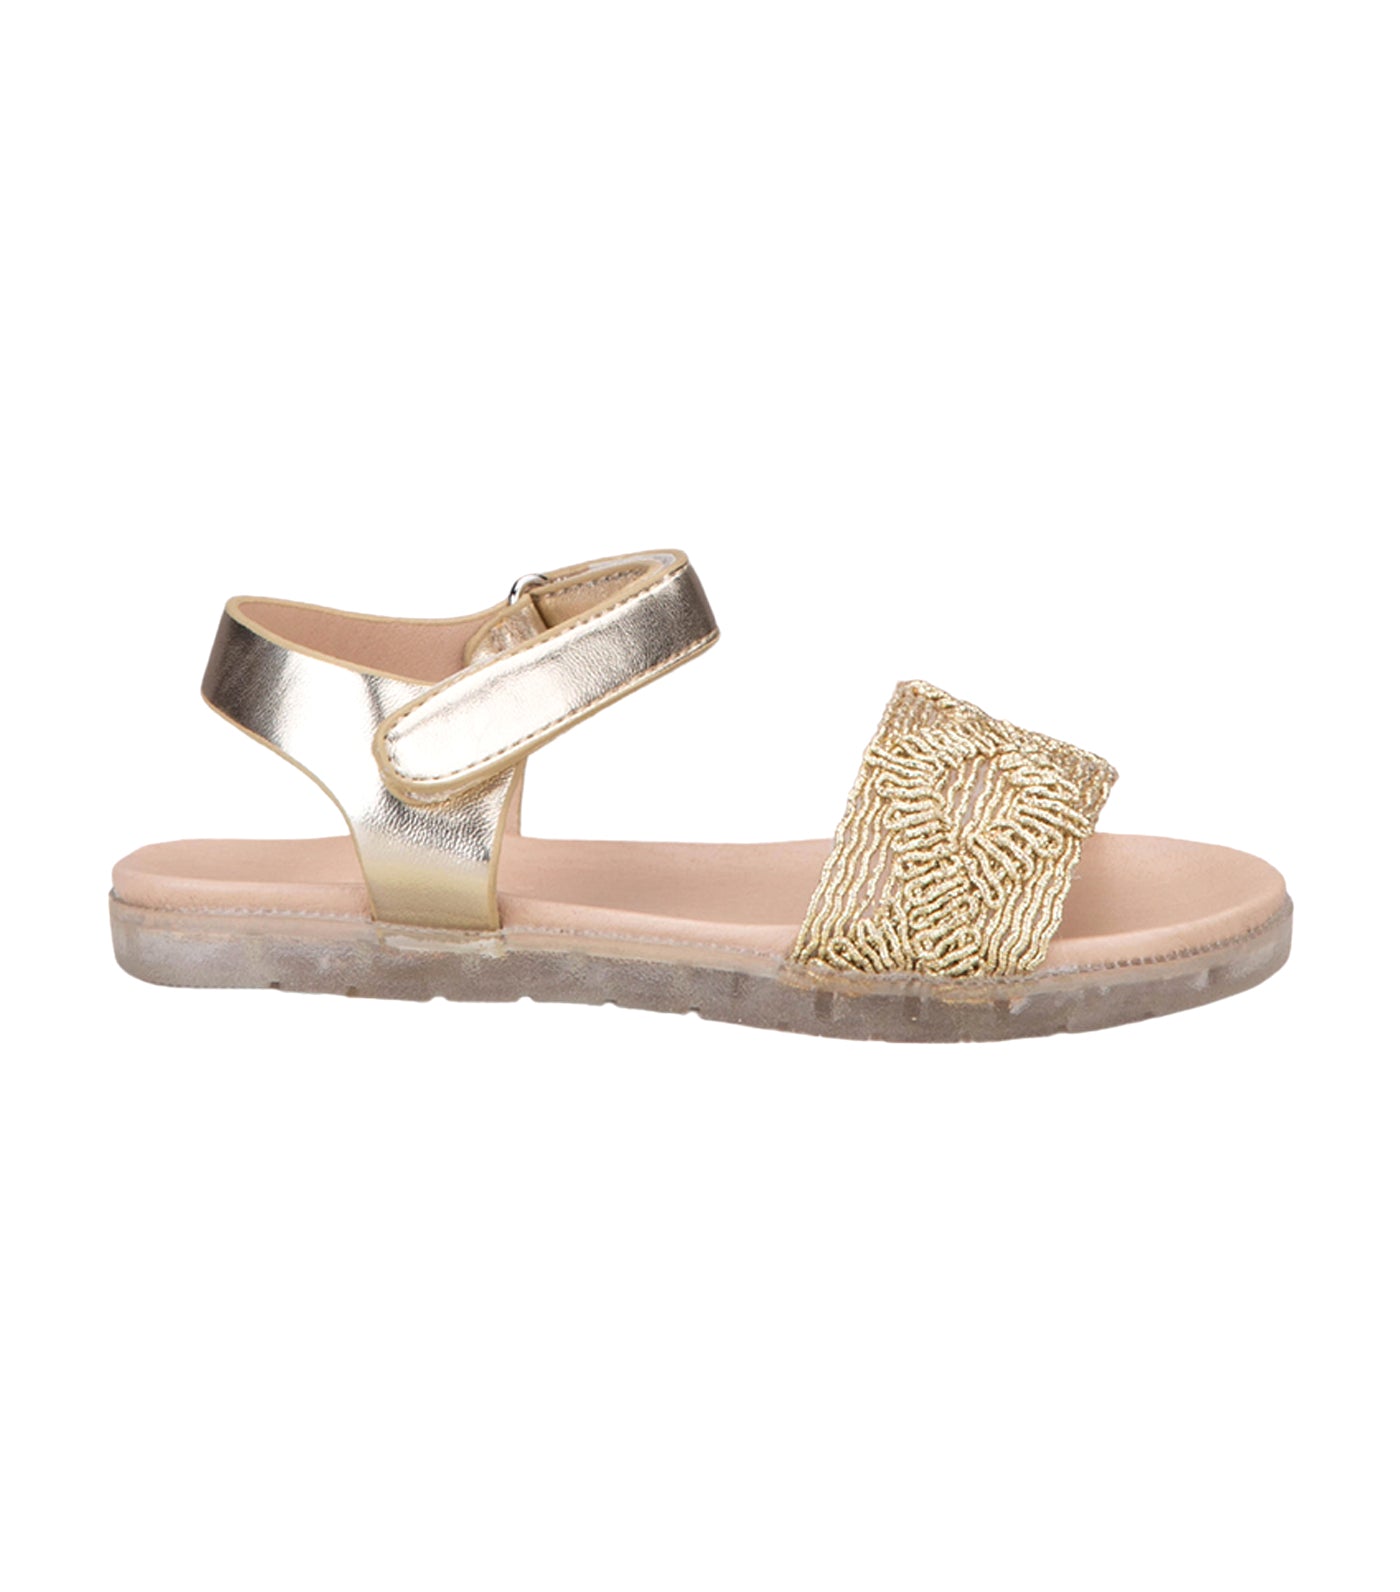 Bina Kids Sandals for Girls - Gold